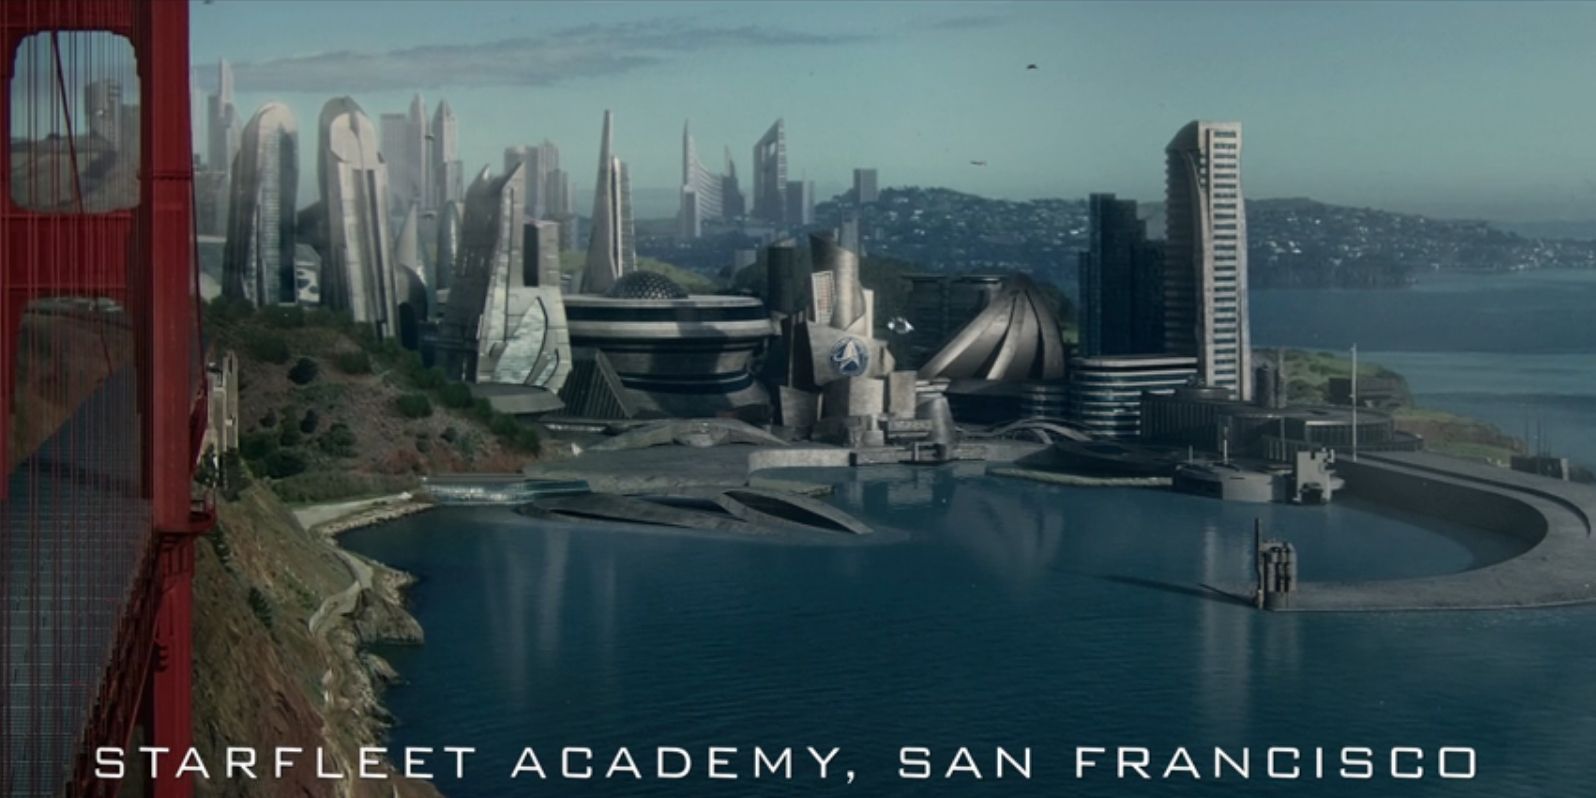 Starfleet Academy, San Francisco, in Star Trek Picard season 2 episode 1